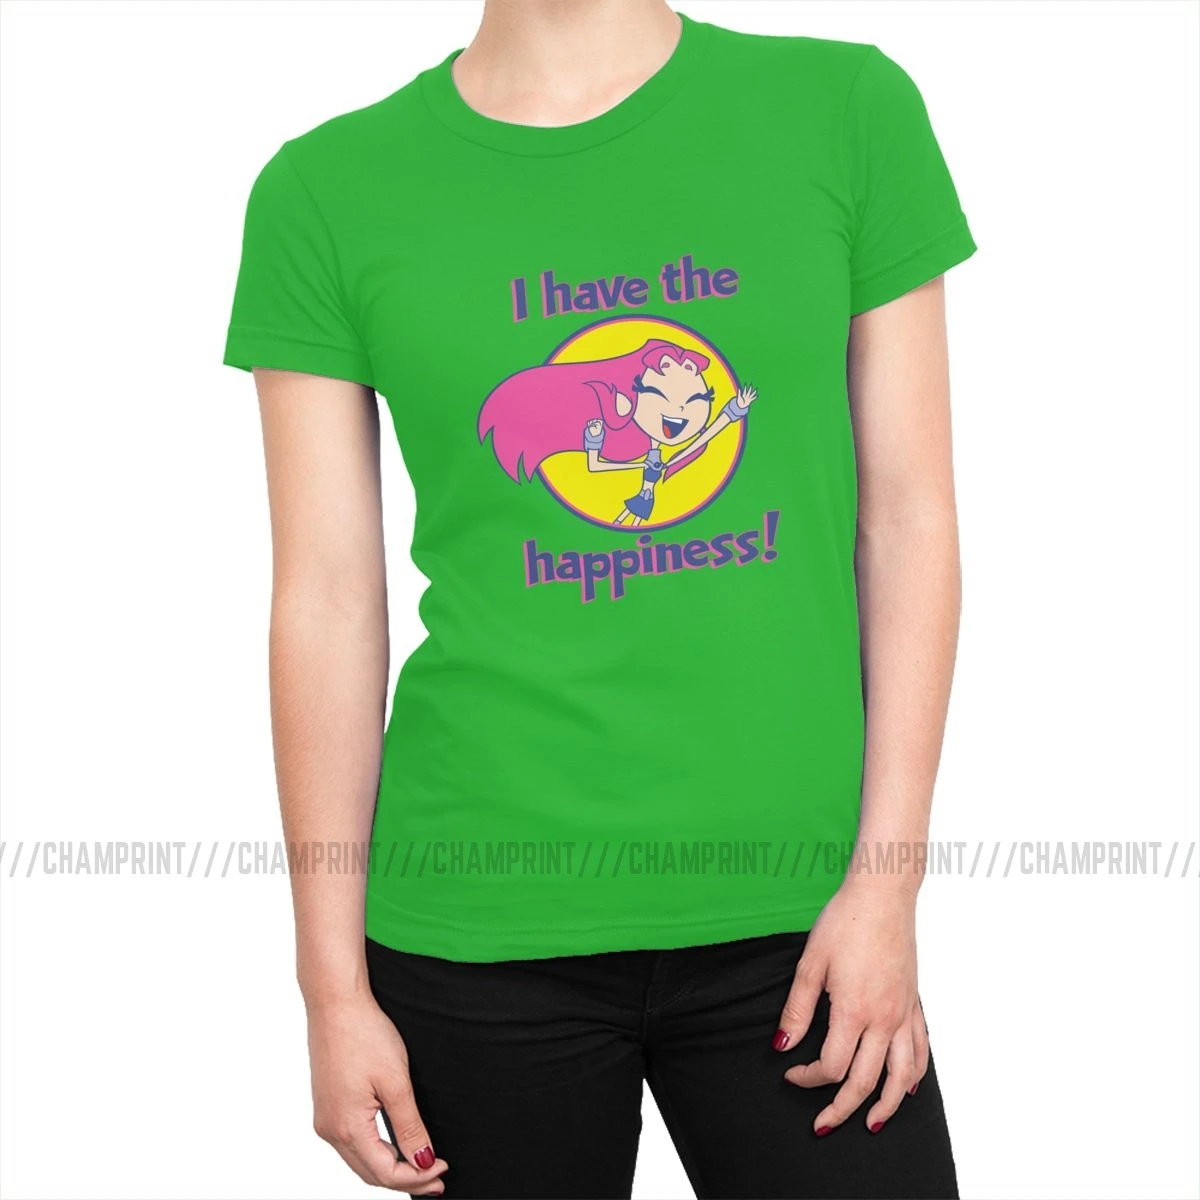 Teen Titans Go Starfire I Have The футболка с надписью Happiness женские футболки Kawaii футболки, топ, забавная Женская одежда с графикой - Цвет: Зеленый